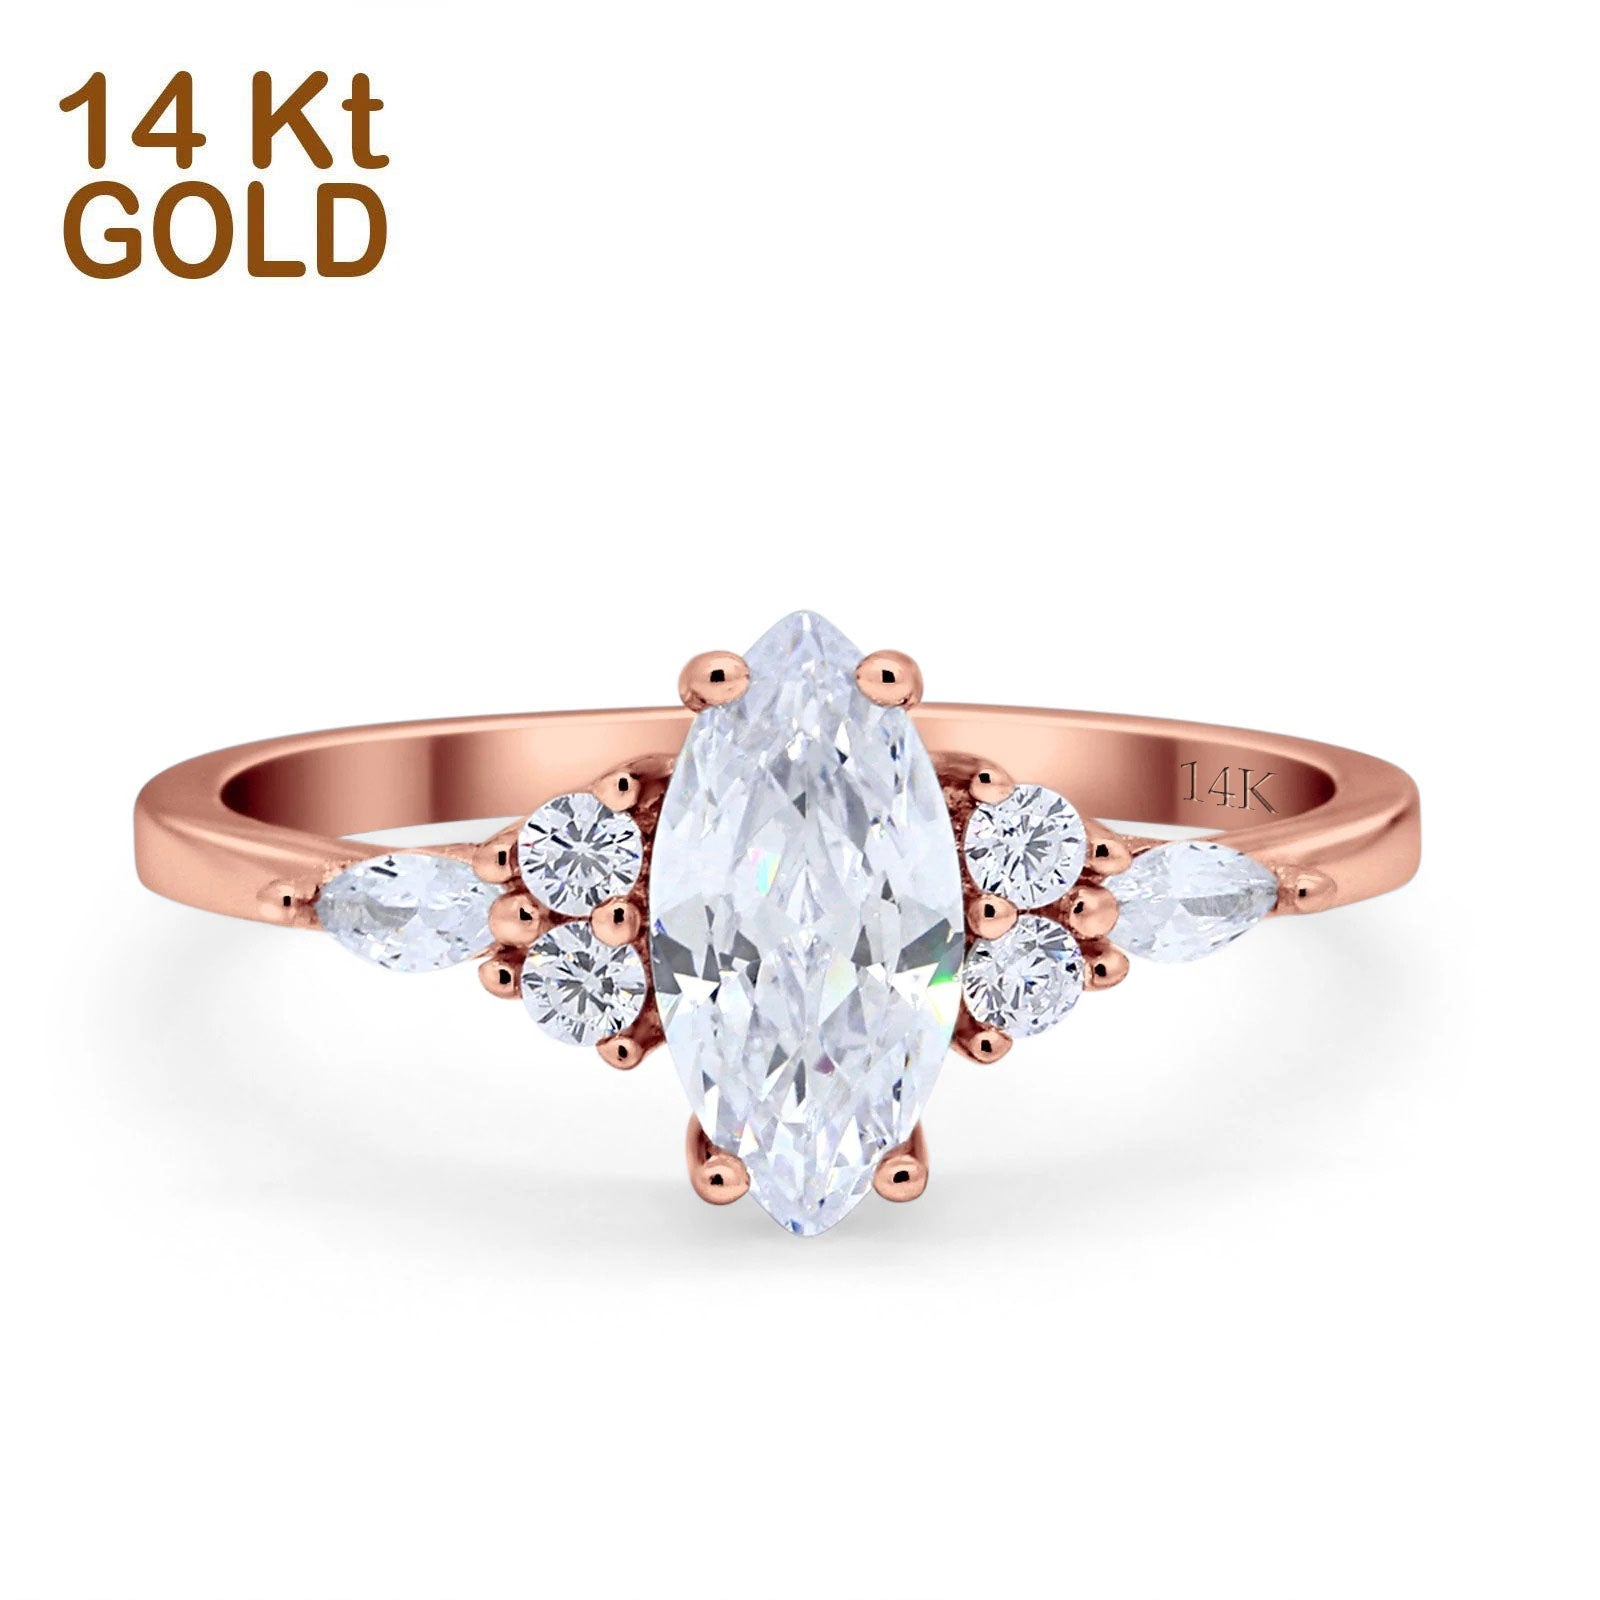 14K Gold Vintage Style Marquise Shape Bridal Simulated Cubic Zirconia Wedding Engagement Ring